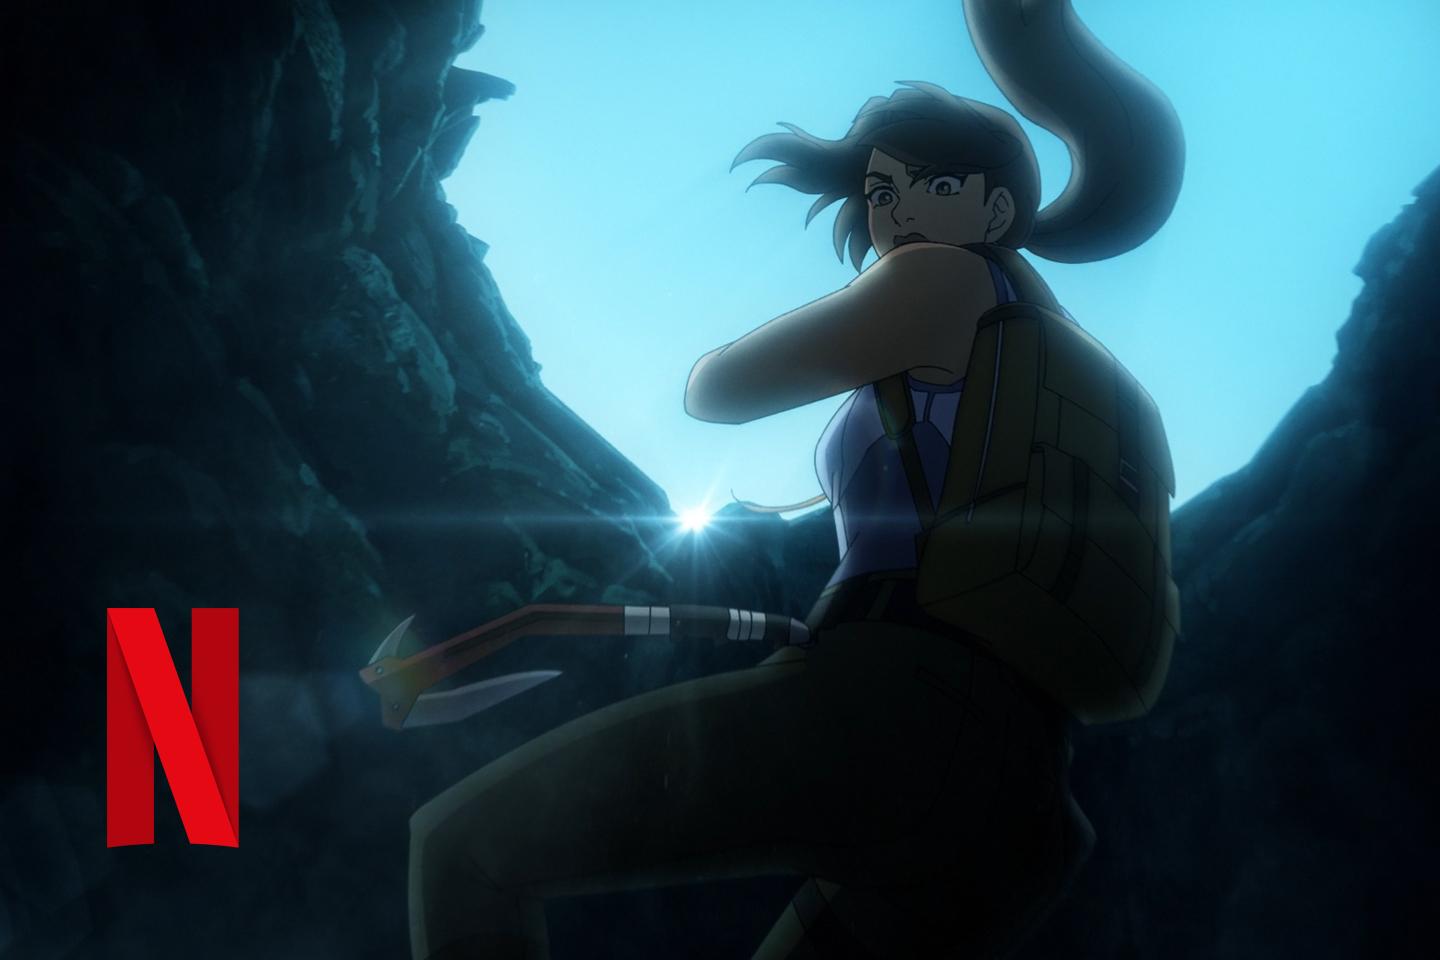 Netflix logo on a still image of Lara Croft entering a cave.